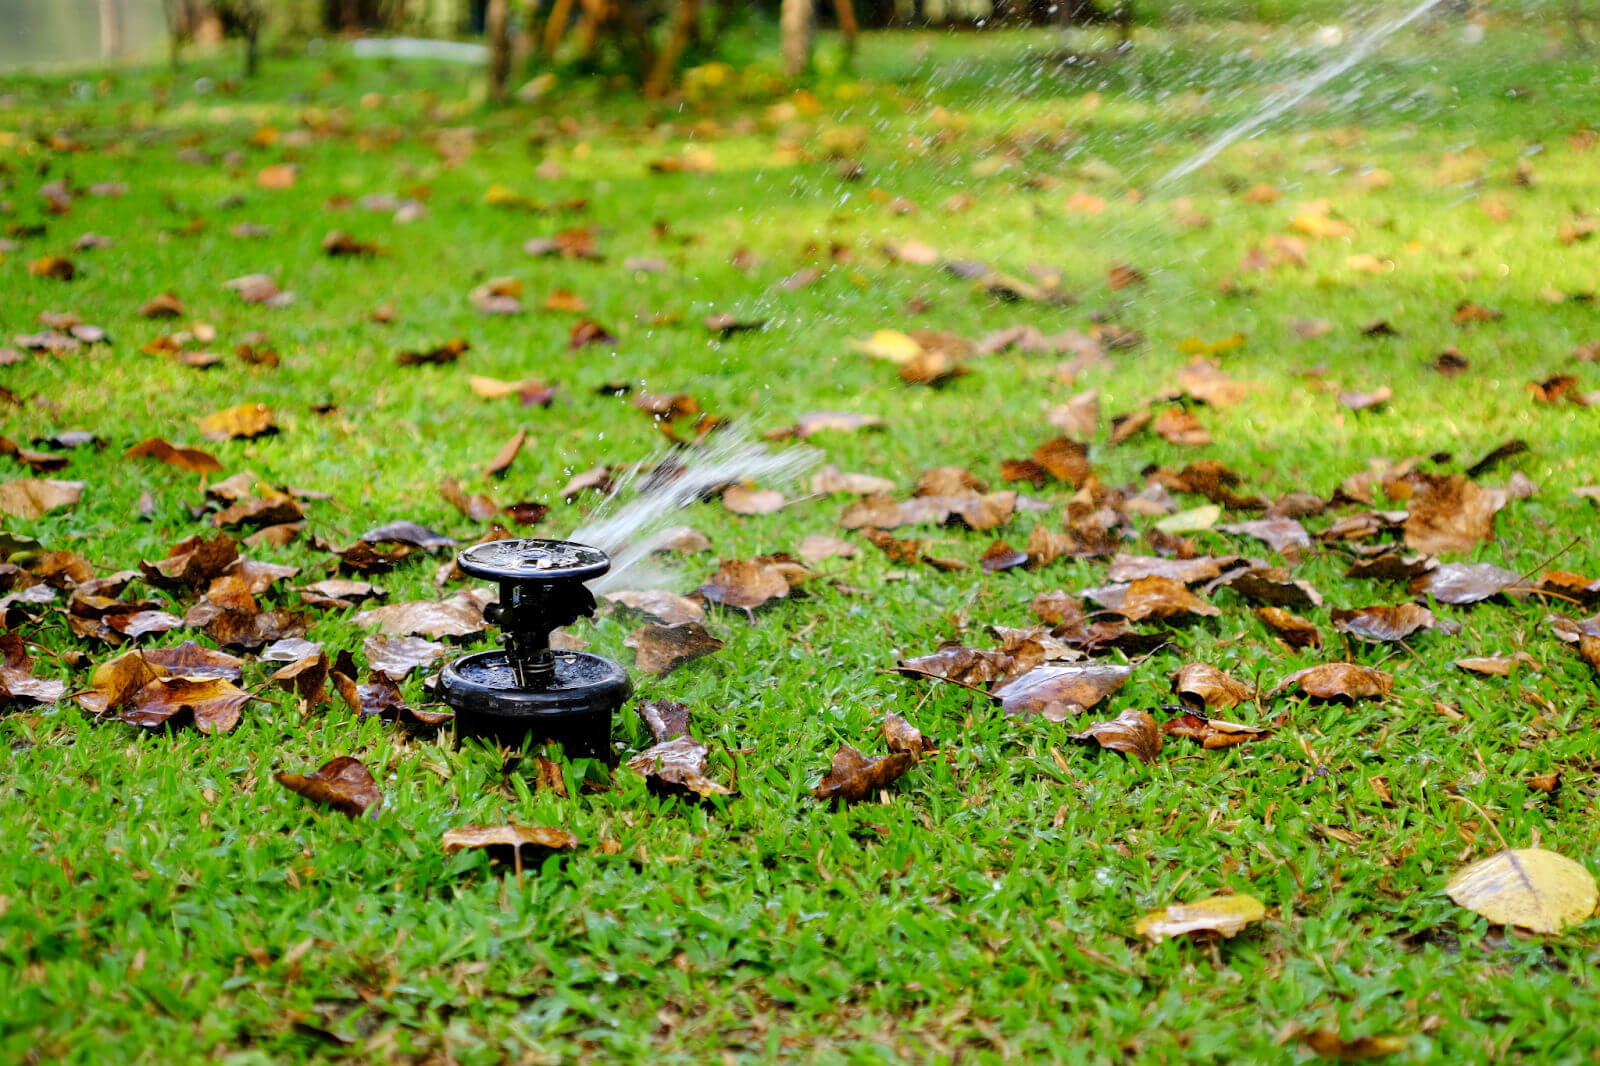 An irrigation sprinkler in operation